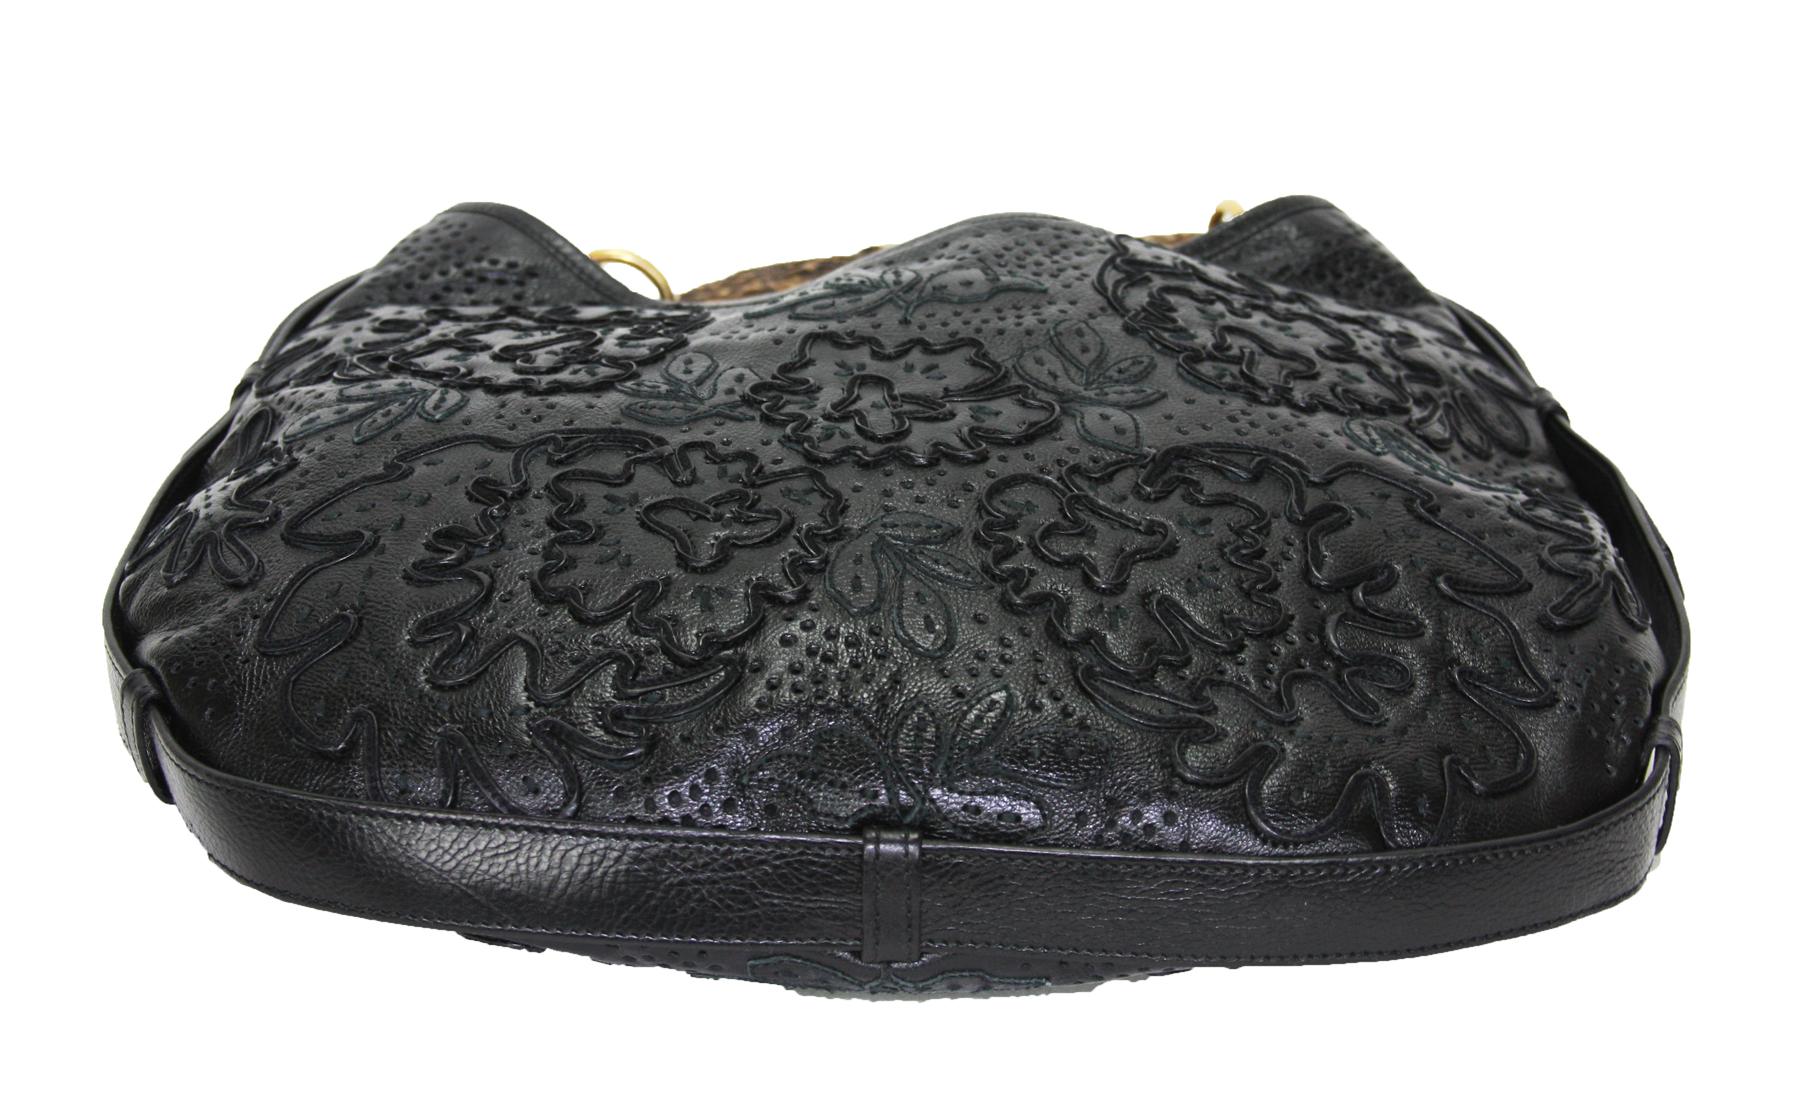 Iconic Tom Ford for Yves Saint Laurent Mombasa Black Embellished Leather Bag 2